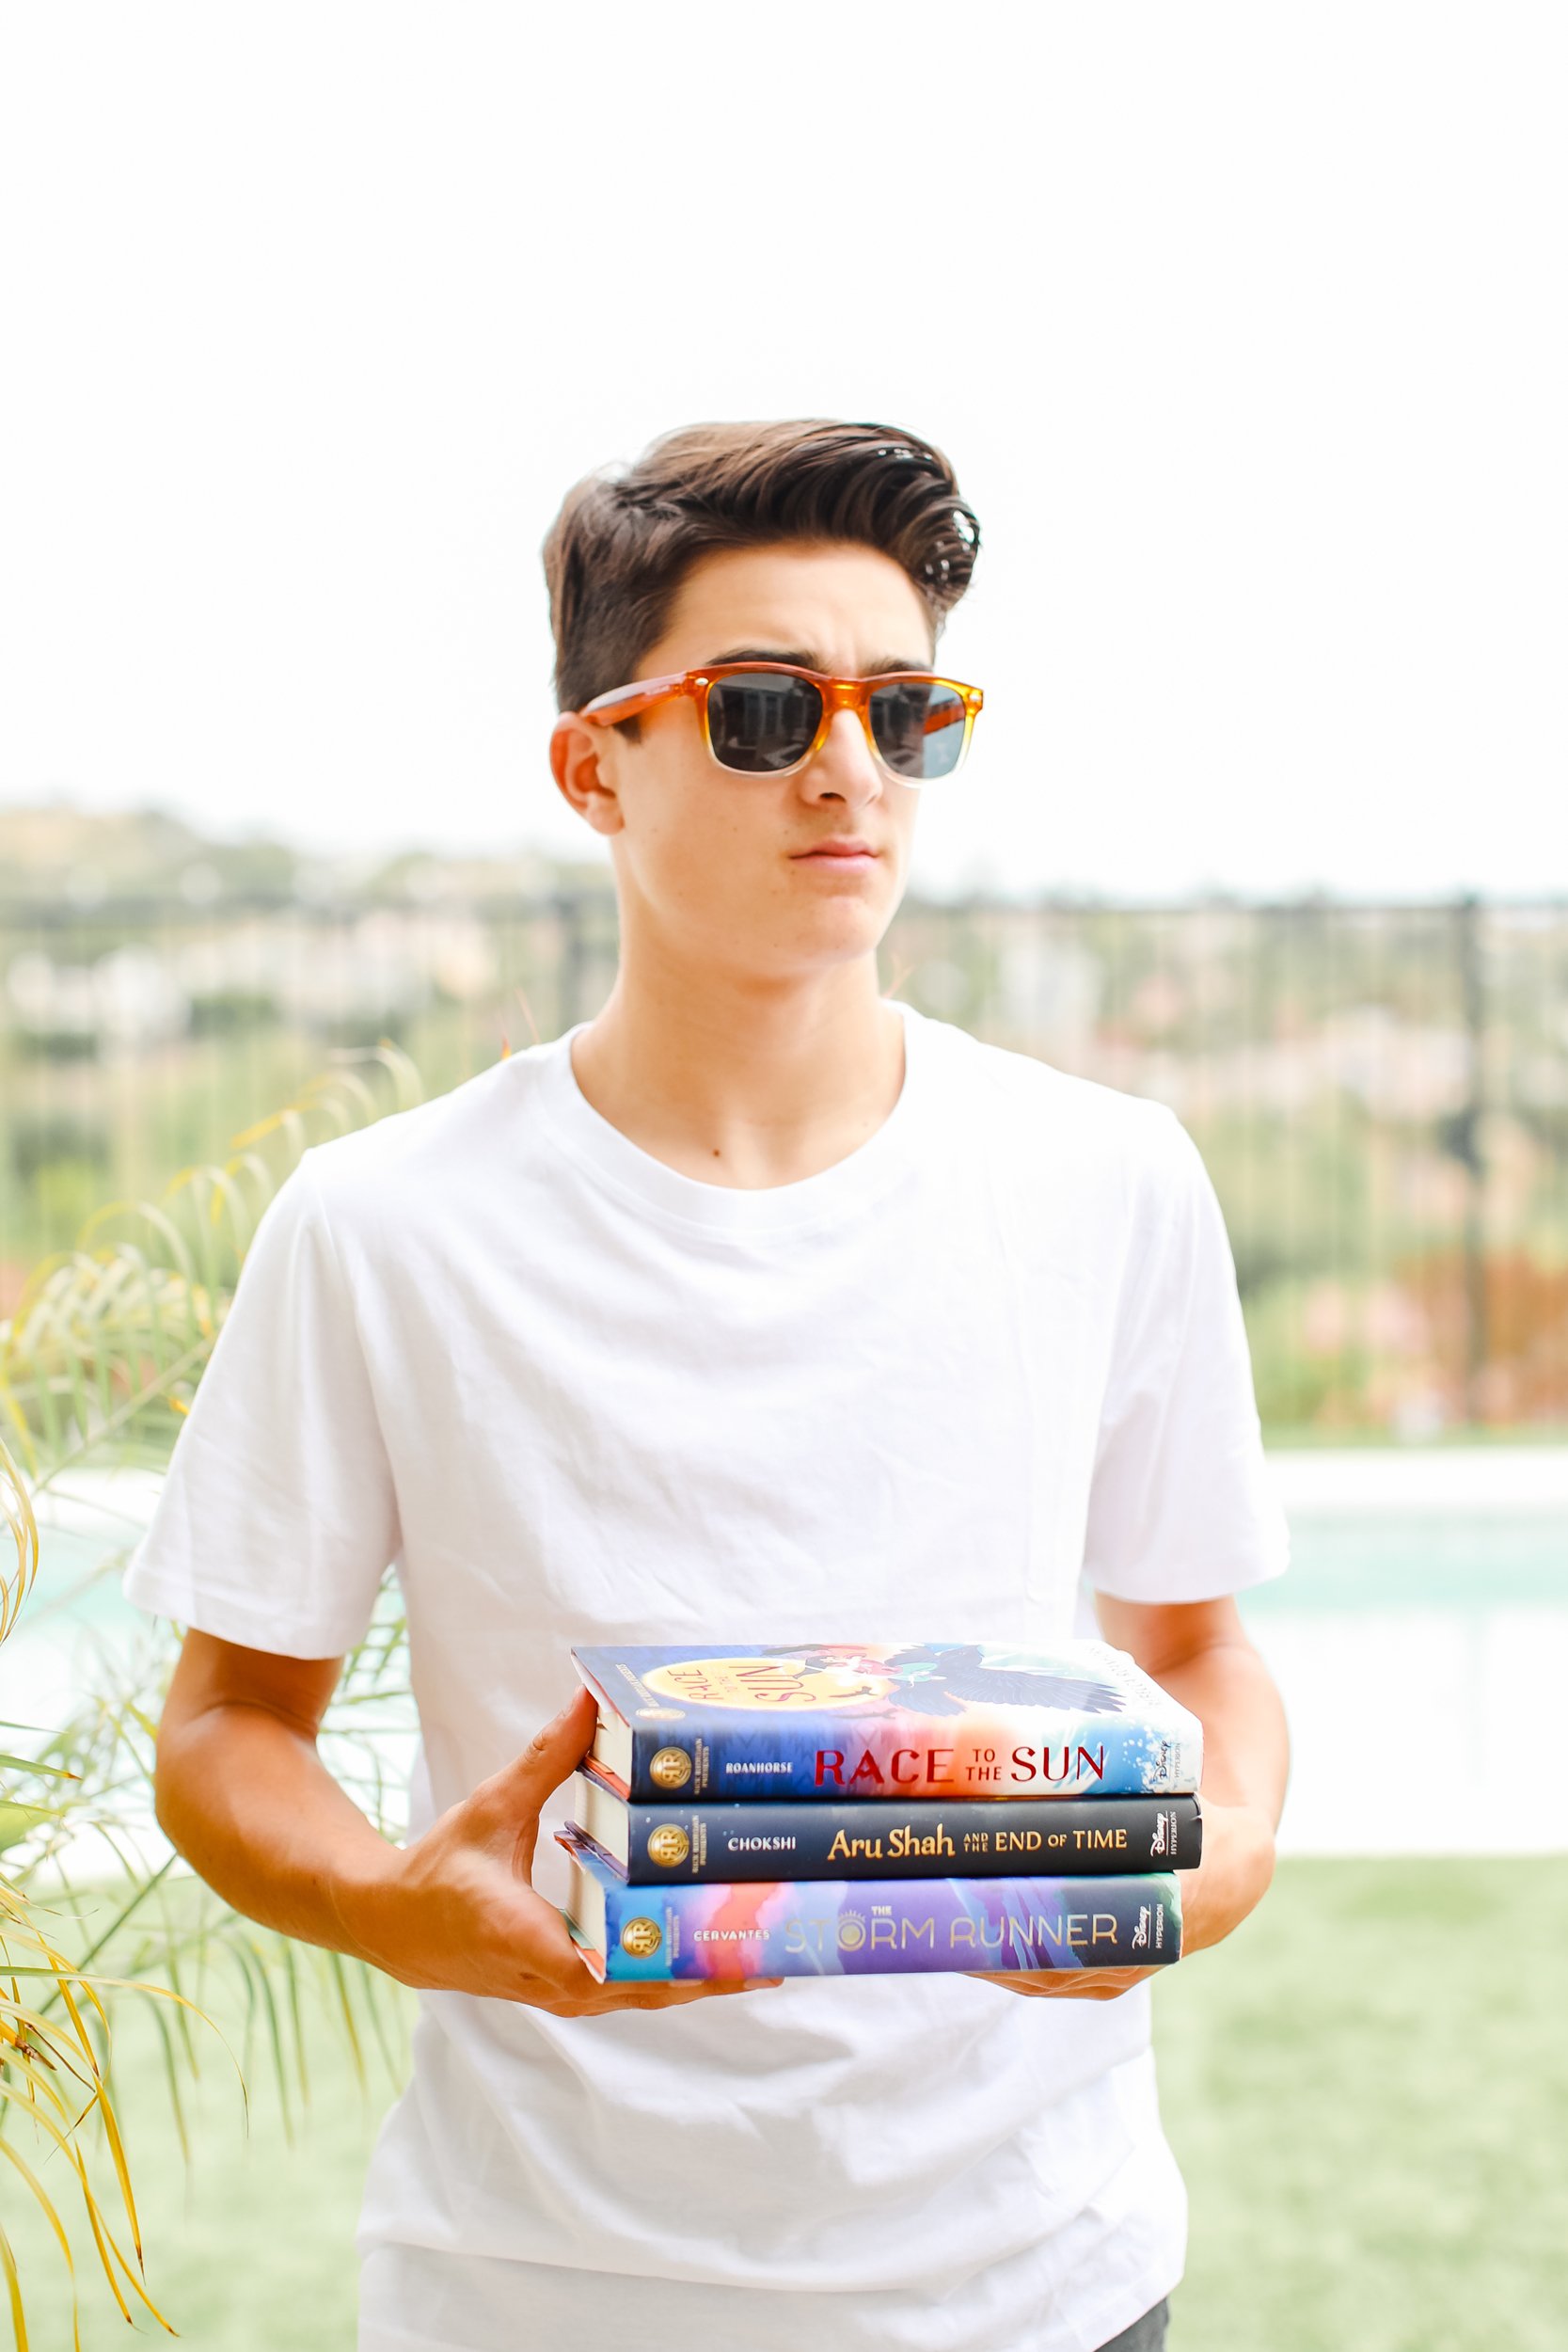 boy holding books